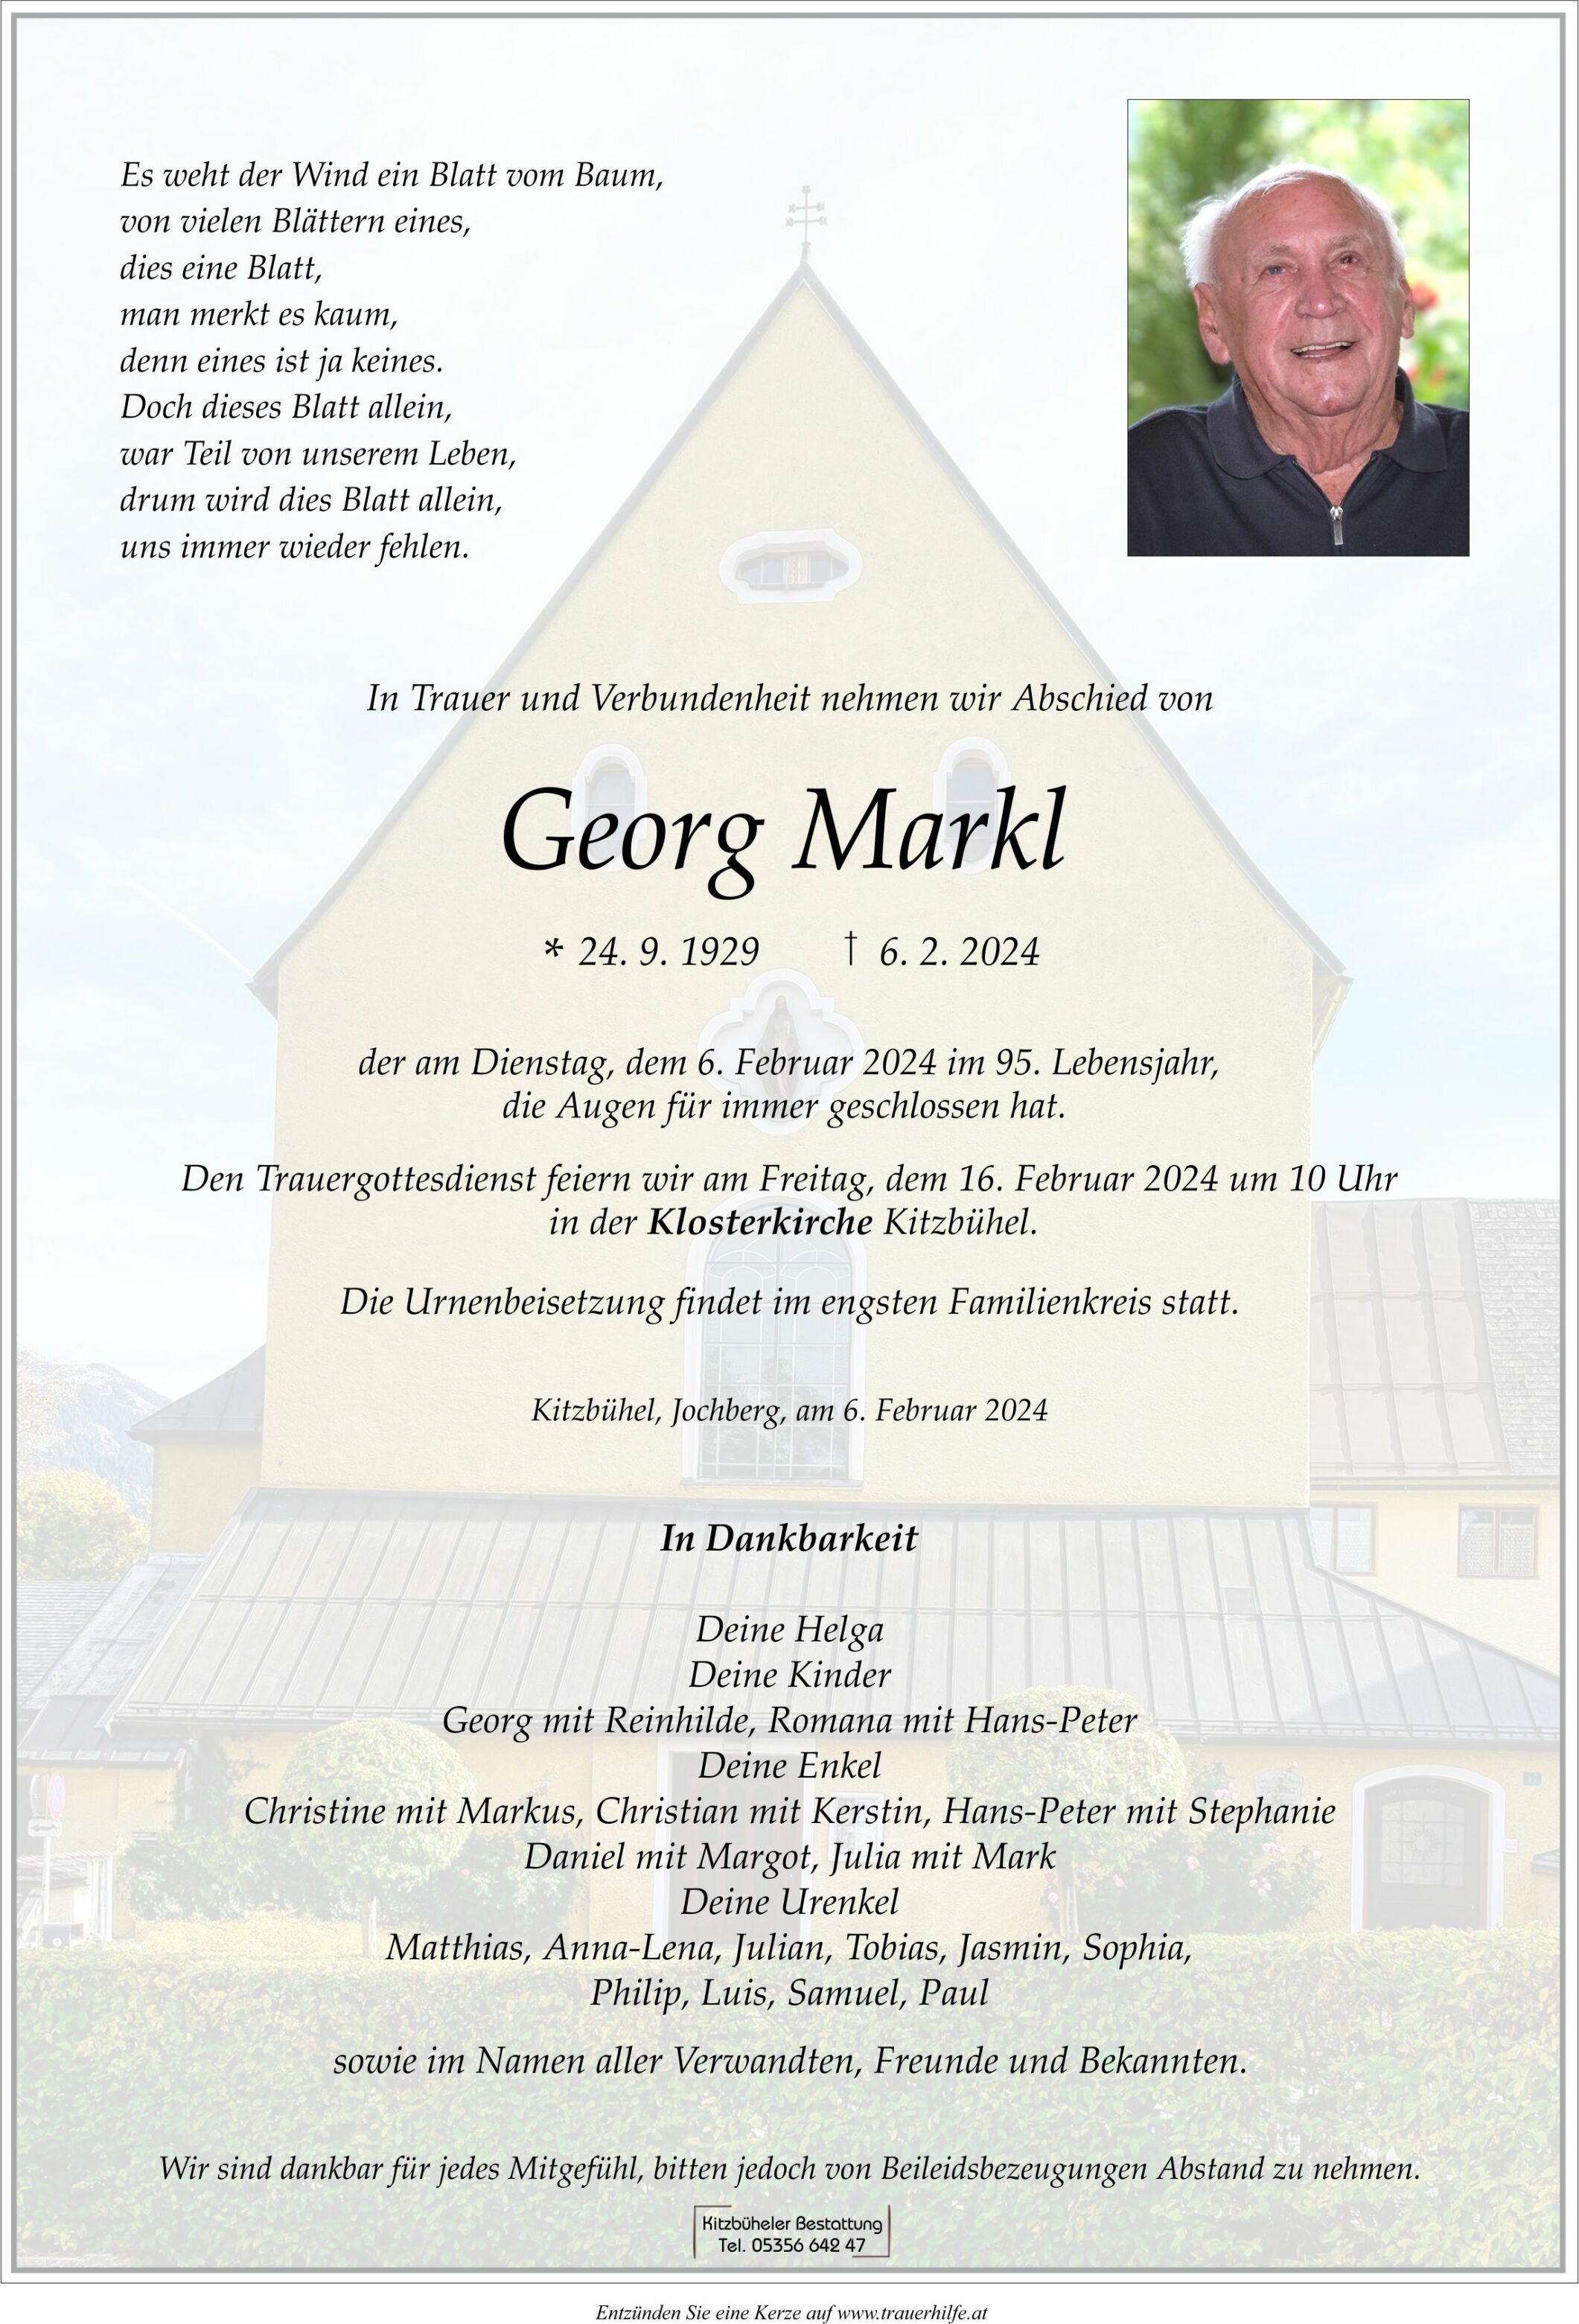 Georg Markl